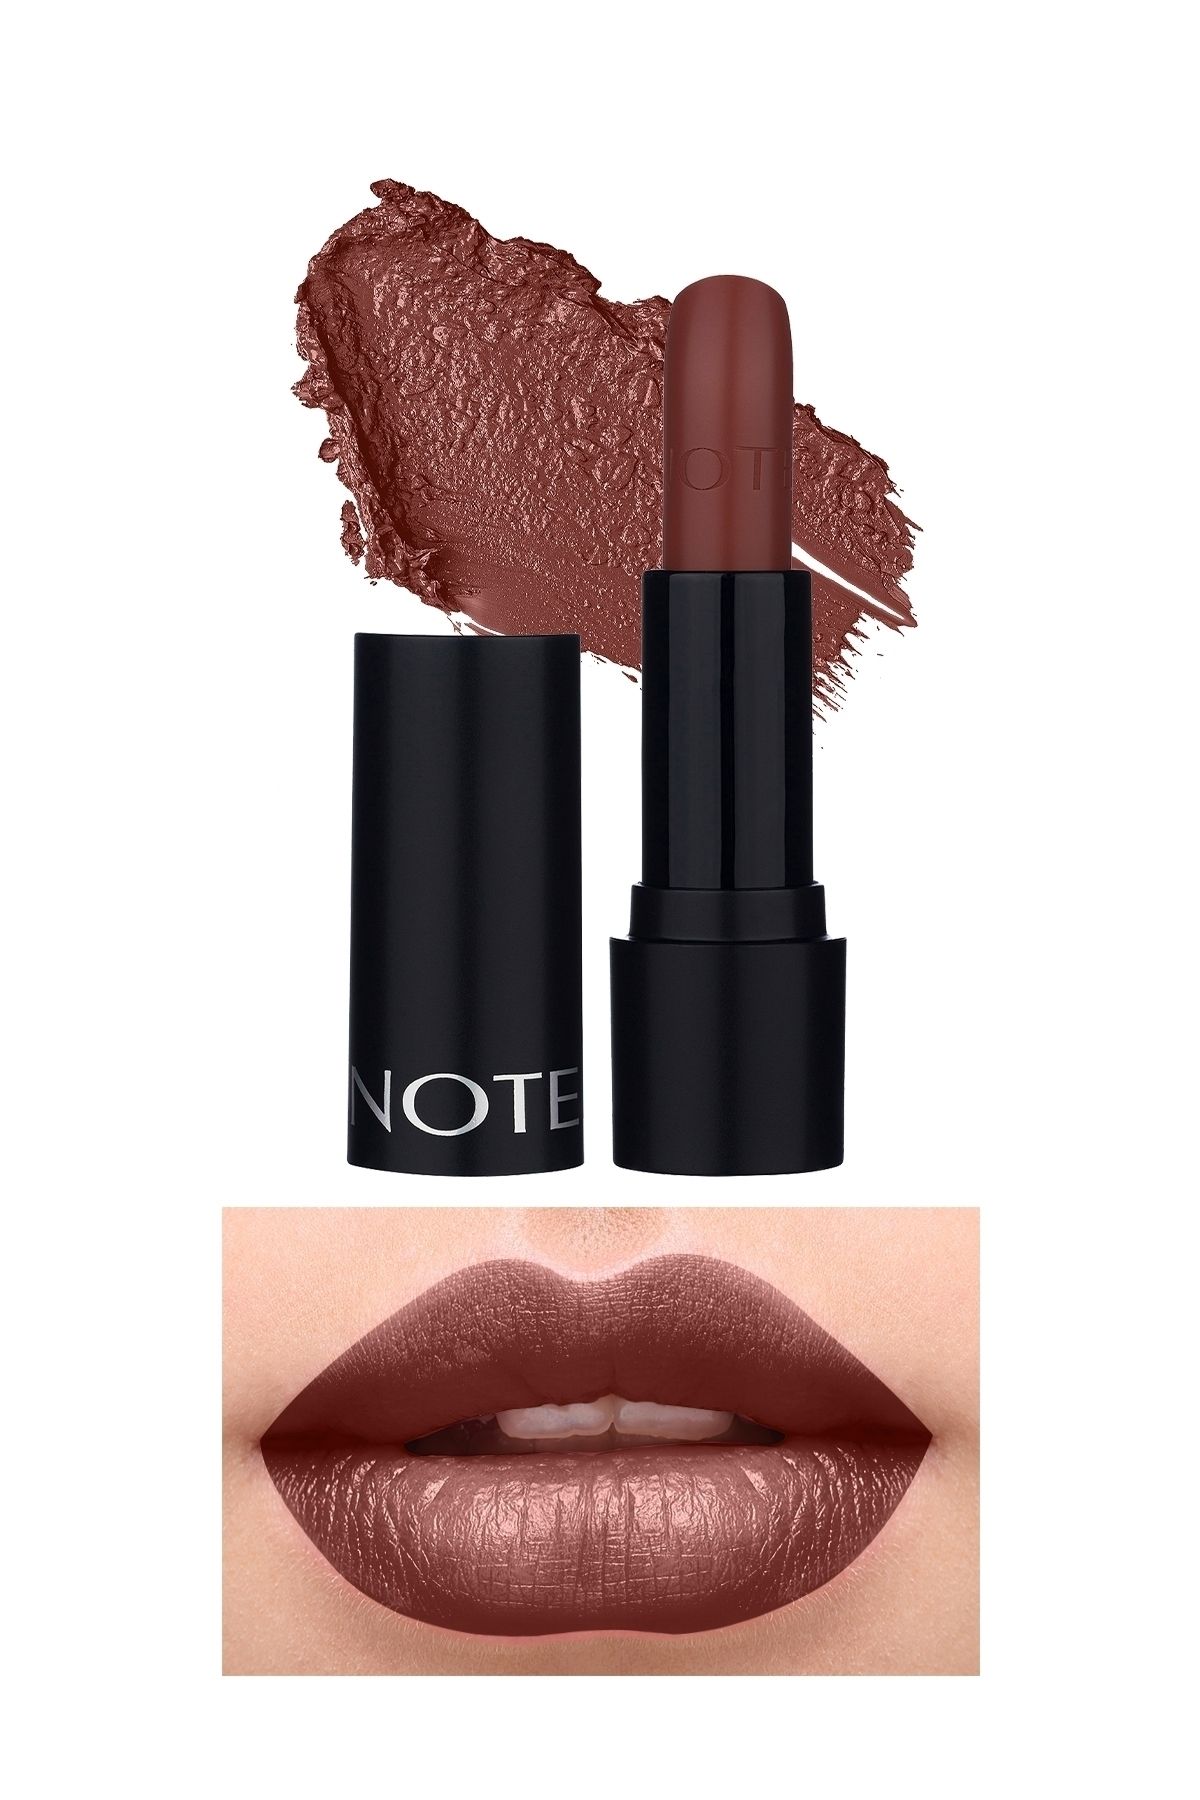 Note Cosmetics Deep Impact Lipstick Kremsi Dokulu Yarı Parlak Ruj 07 Warm Chocolatte - Kahverengi